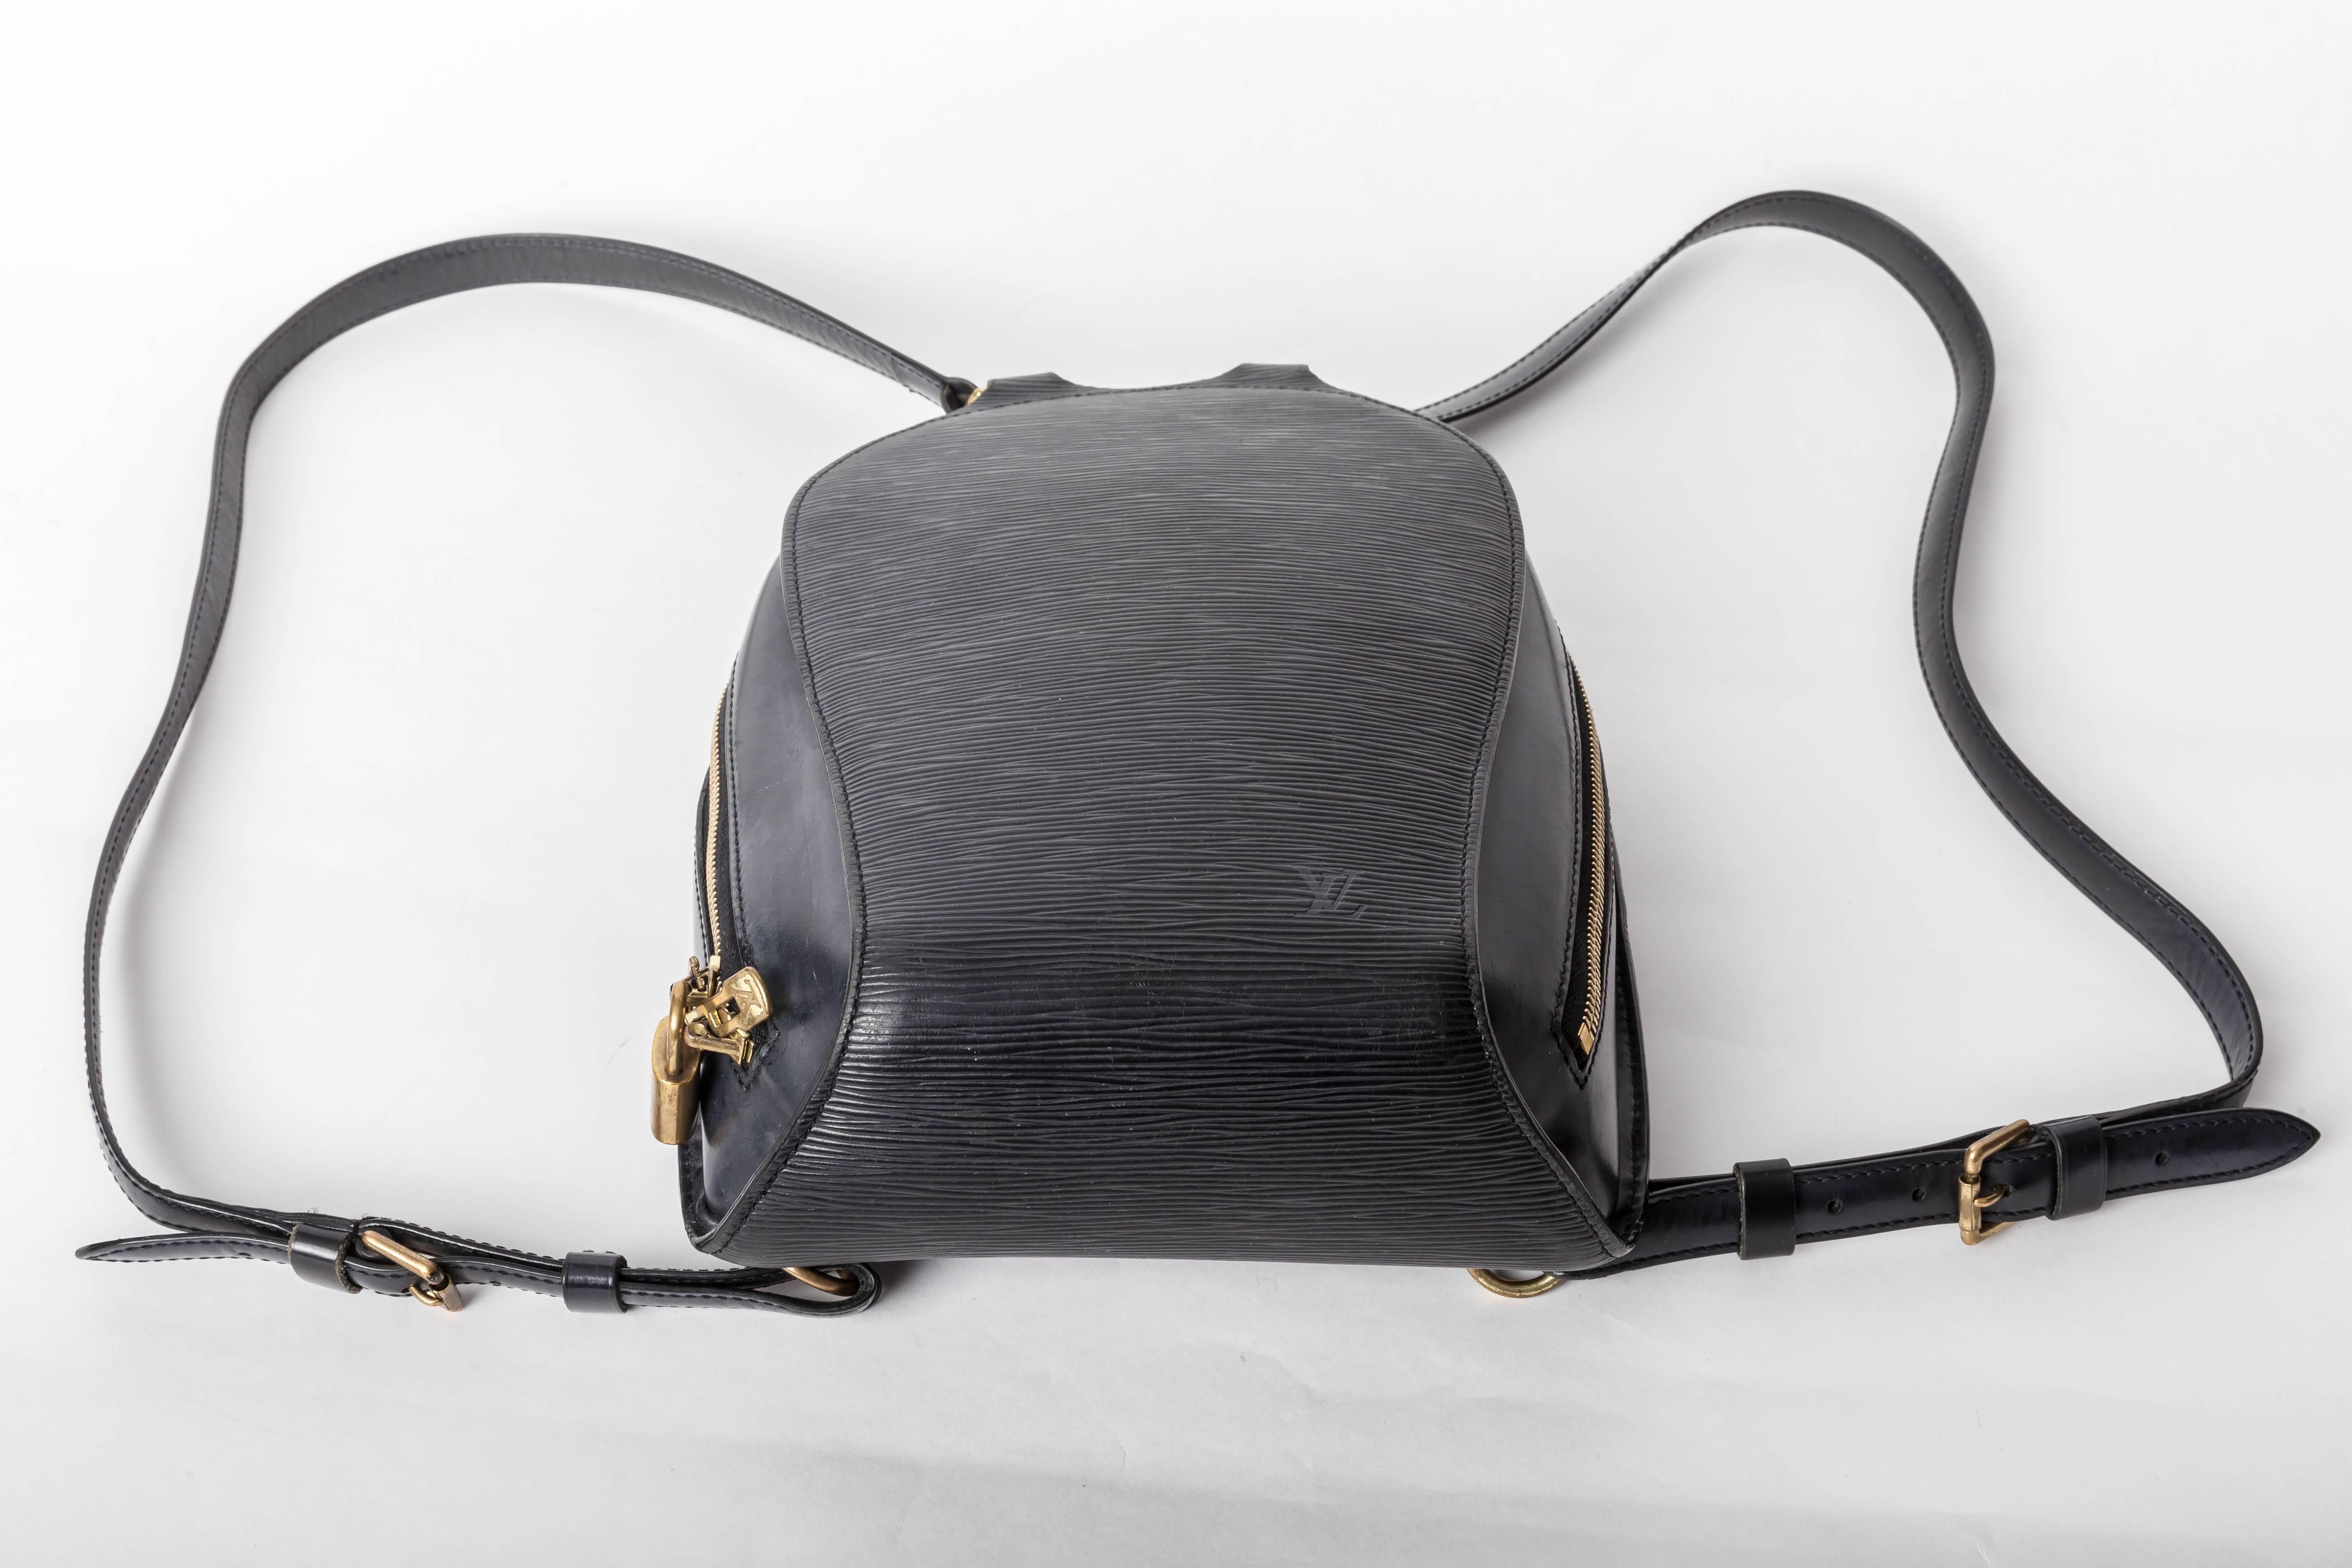 Fantastic Louis Vuitton Backpack in Black  Epi Leather
Front Zip Pocket
Adjustable  Straps
Lock is Present However the Key is Missing
